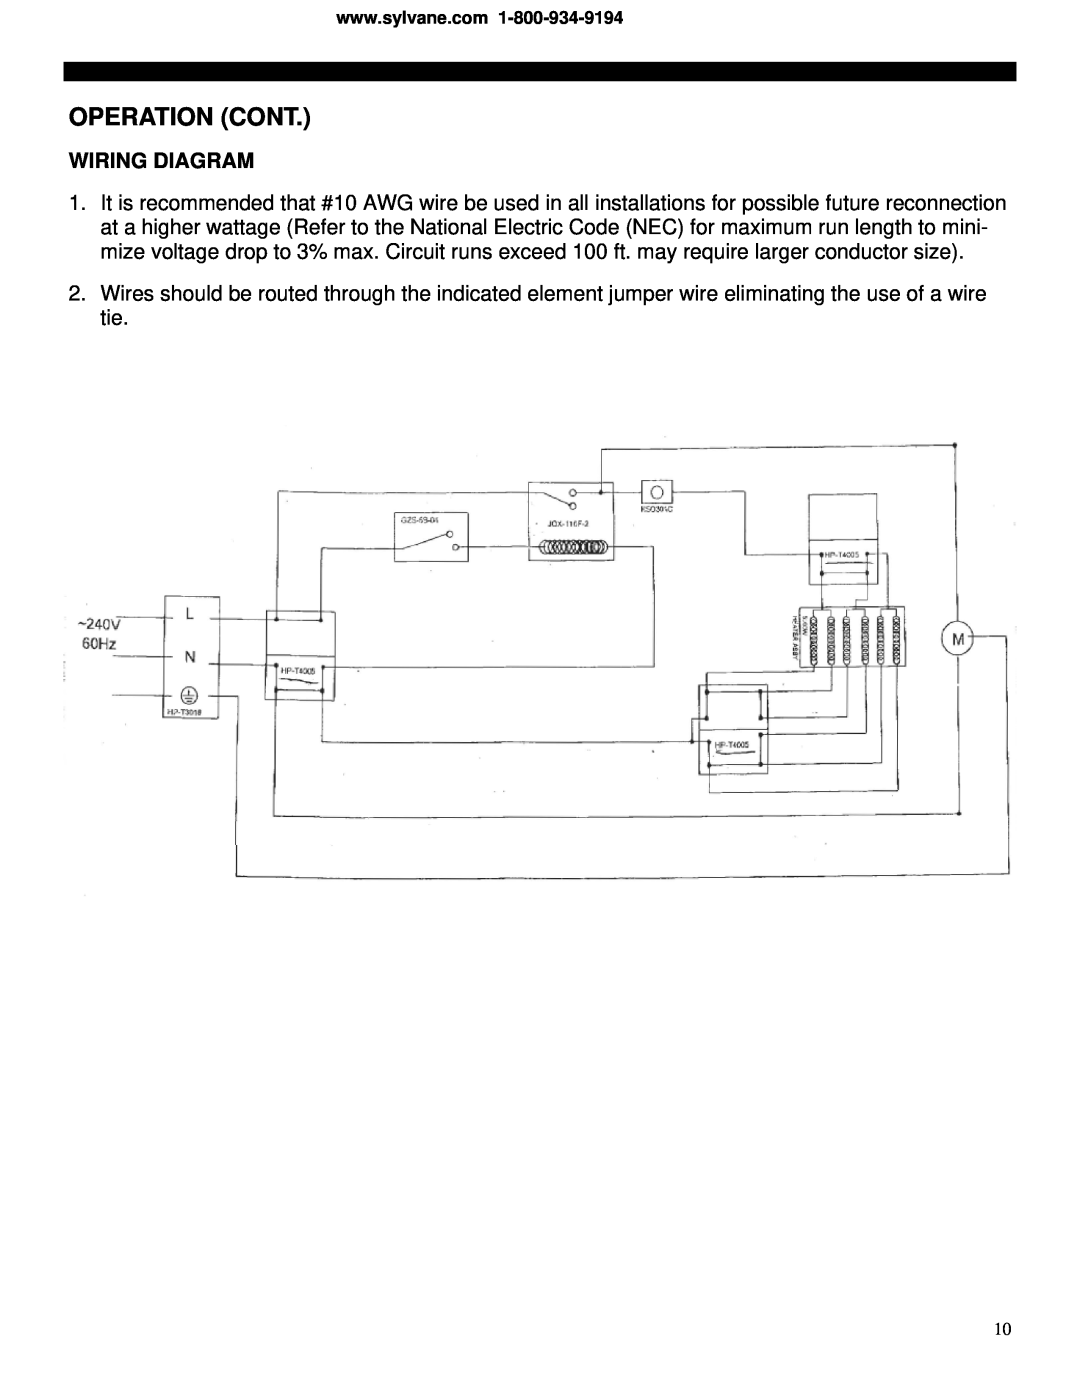 Soleus Air HI1-50-03 manual Operation Cont, Wiring Diagram 